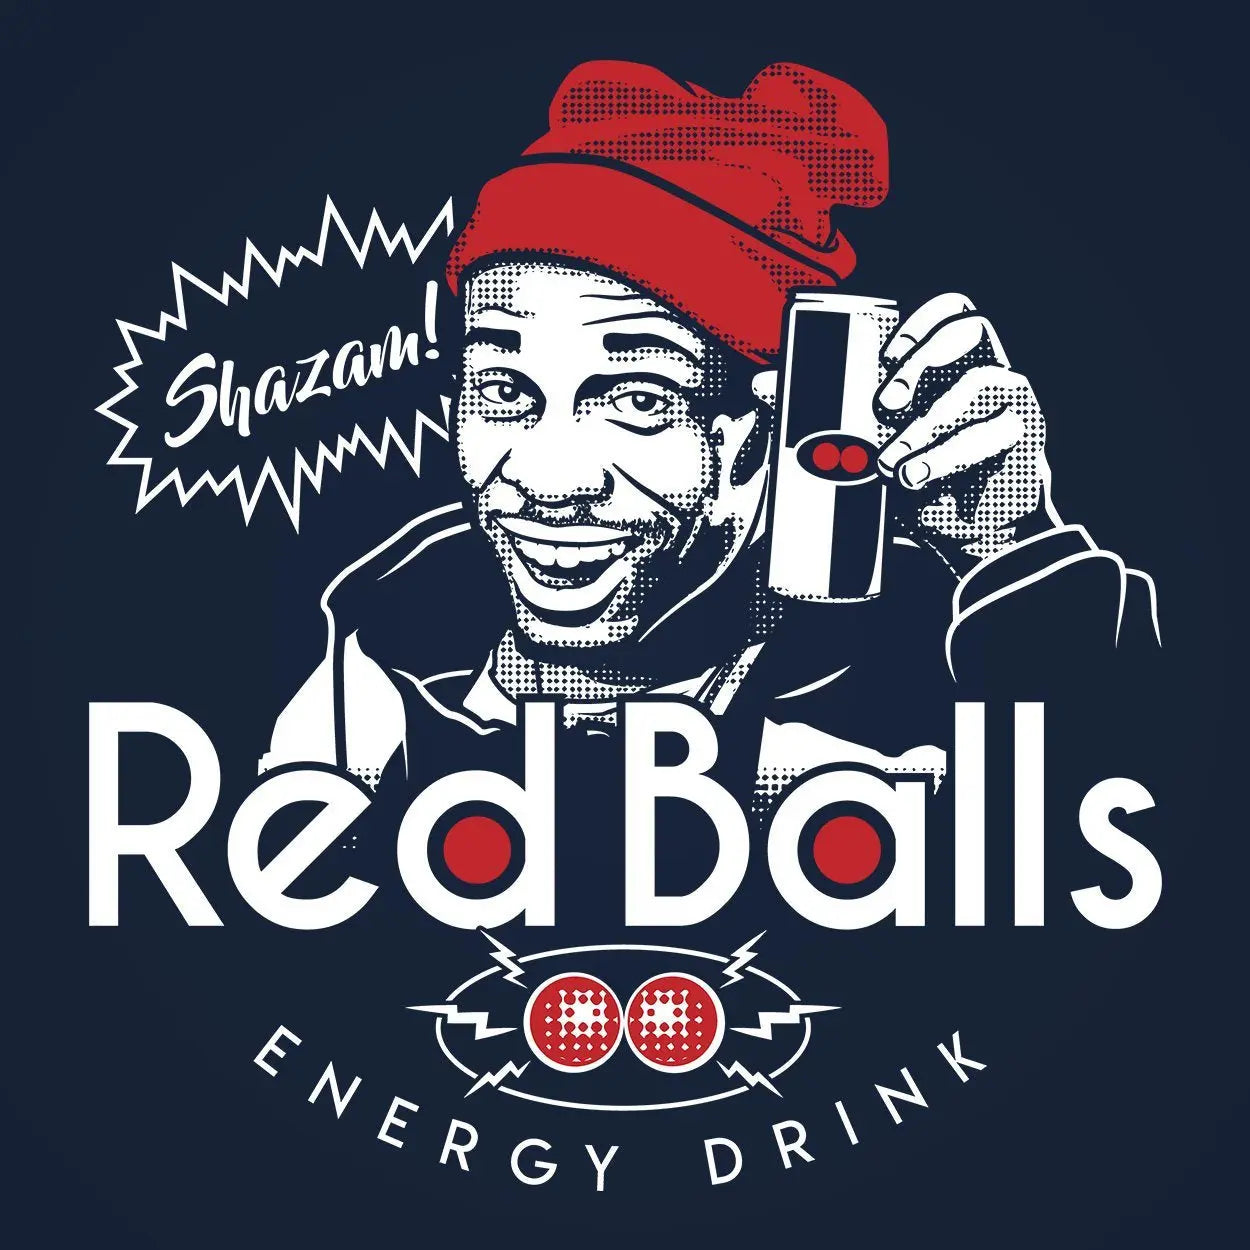 Red Balls Energy Drink Tshirt - Donkey Tees